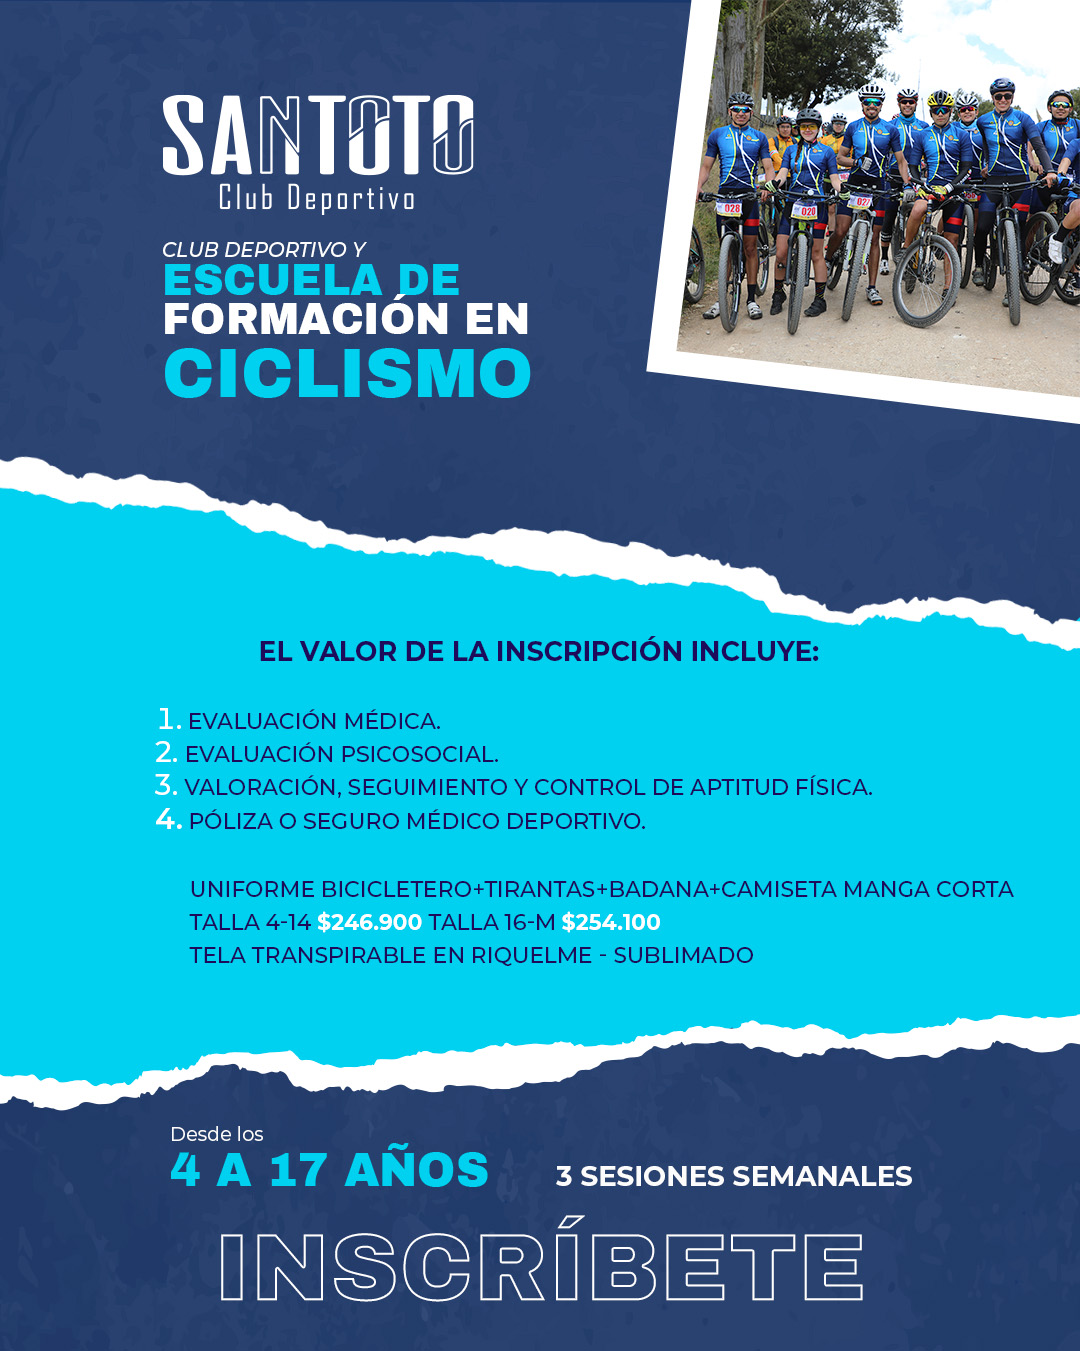 Ciclismo_Club_Deportivo_Santoto_Tunja_2